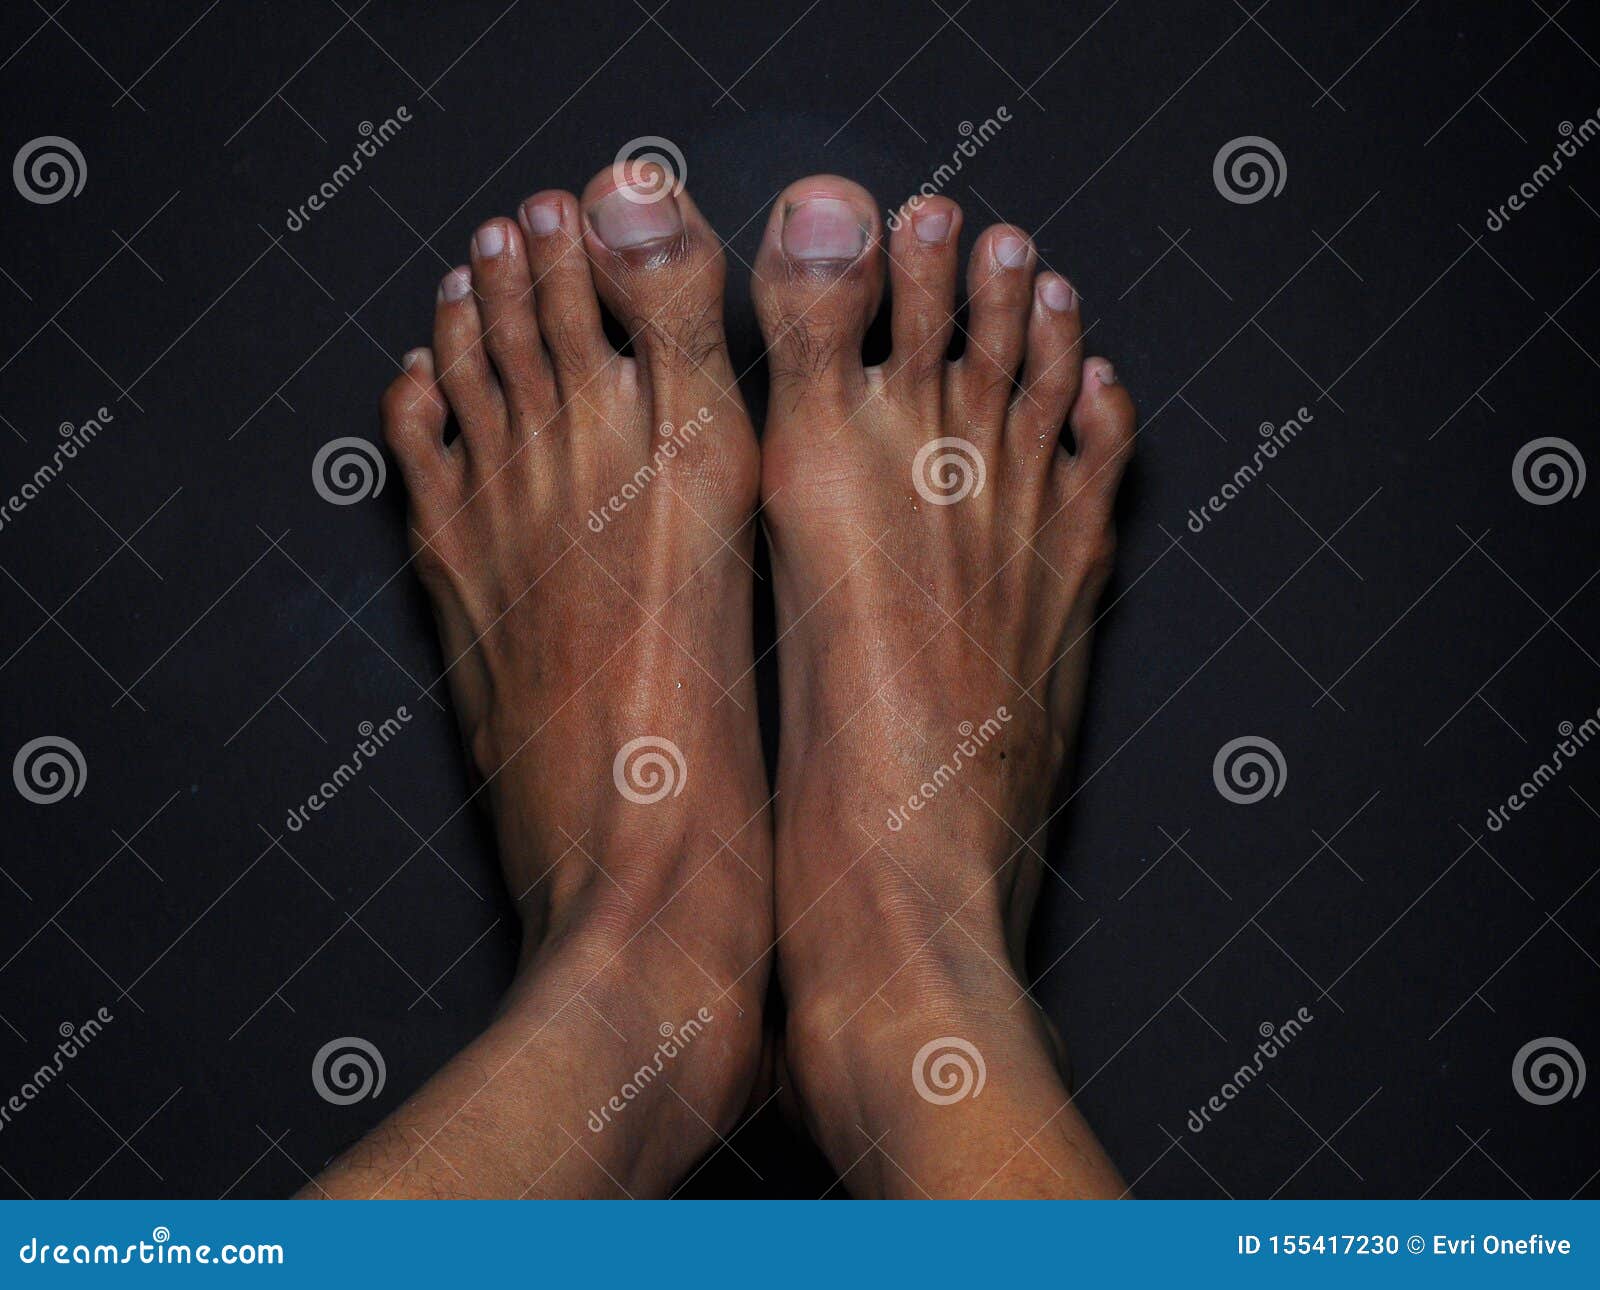 Pics male feet male toes